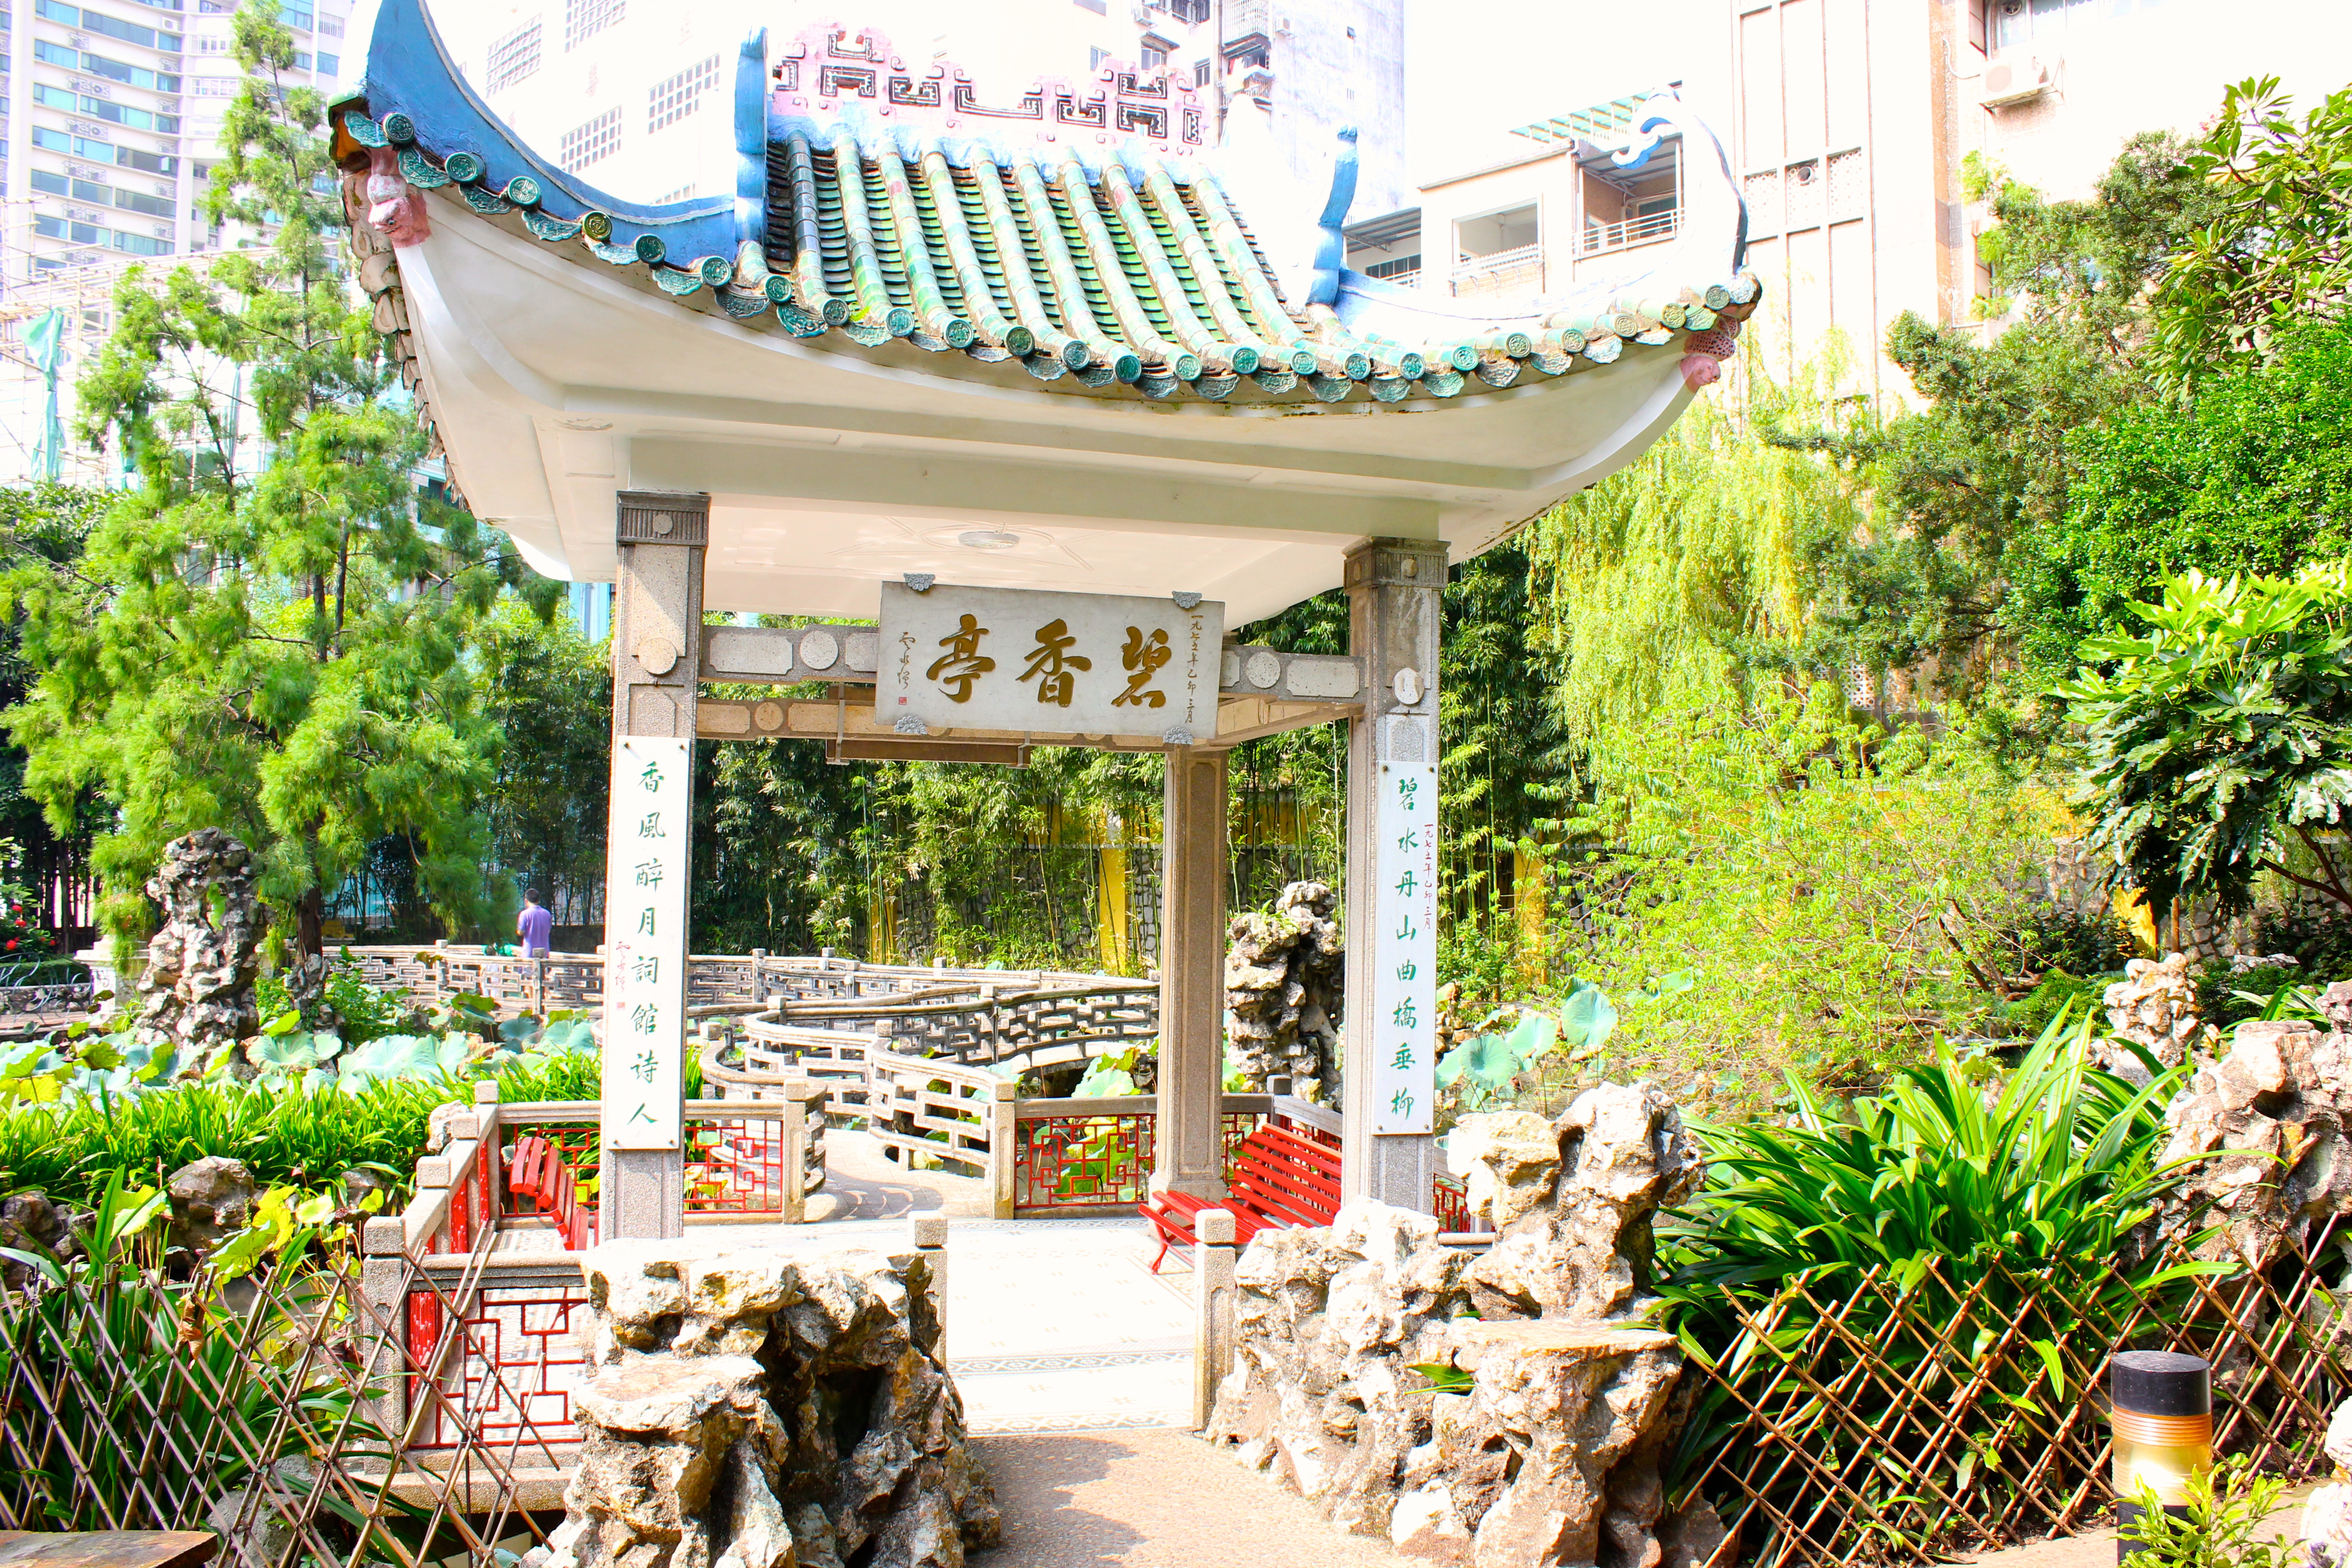 Lou Lim Lok Gardens in Macau